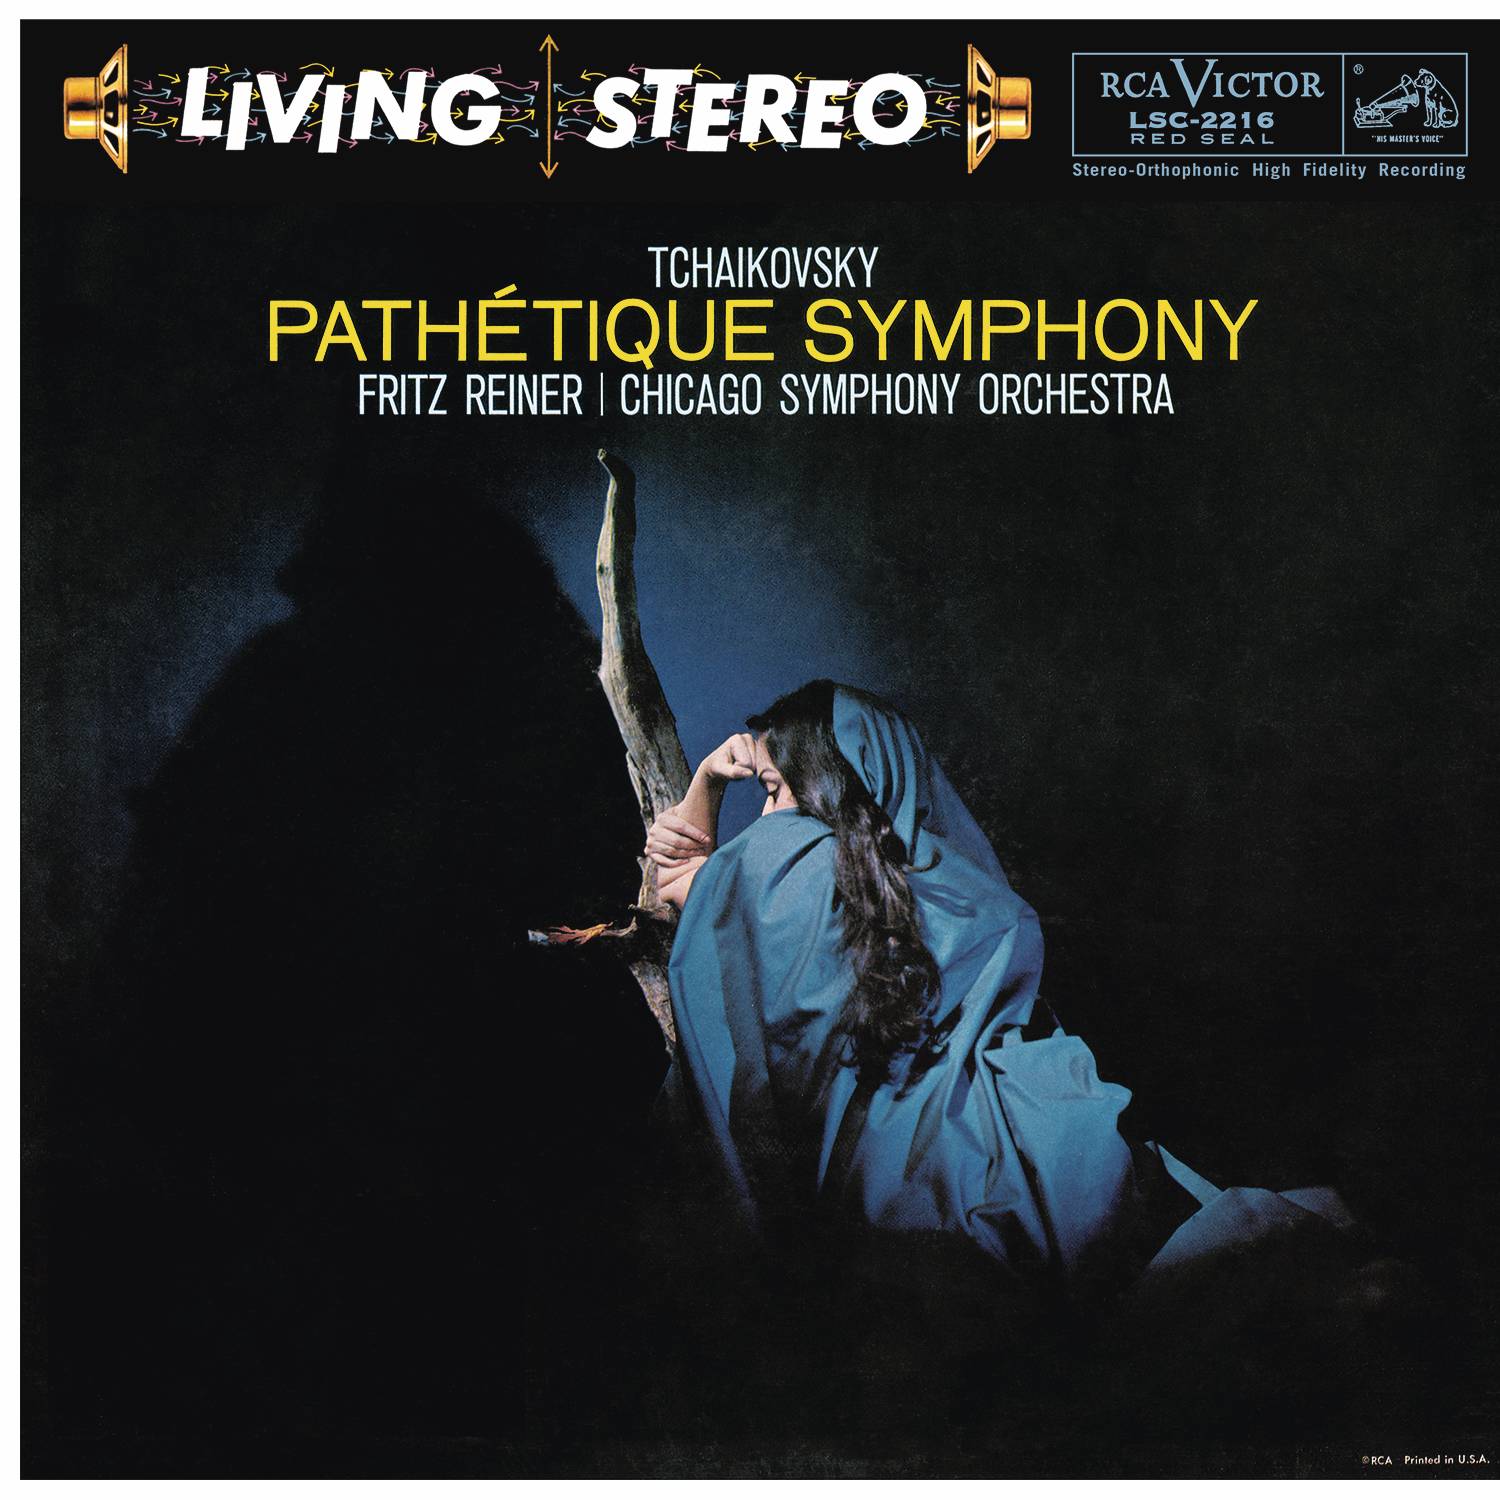 Tchaikovsky: Symphony No. 6 in B Minor, Op. 74 " Pathe tique"